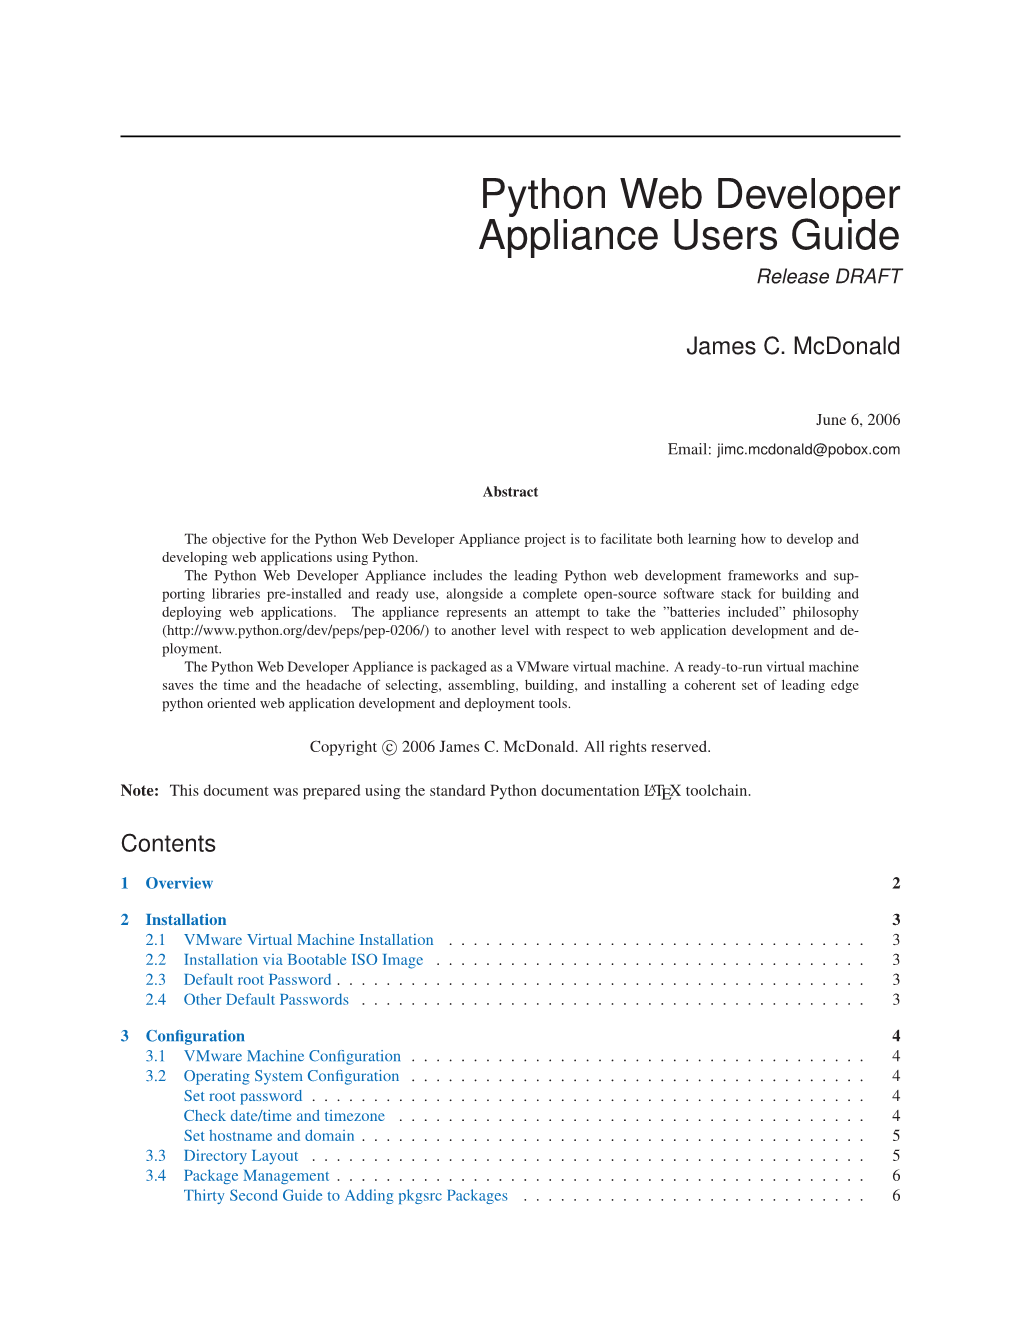 Python Web Developer Appliance Users Guide Release DRAFT